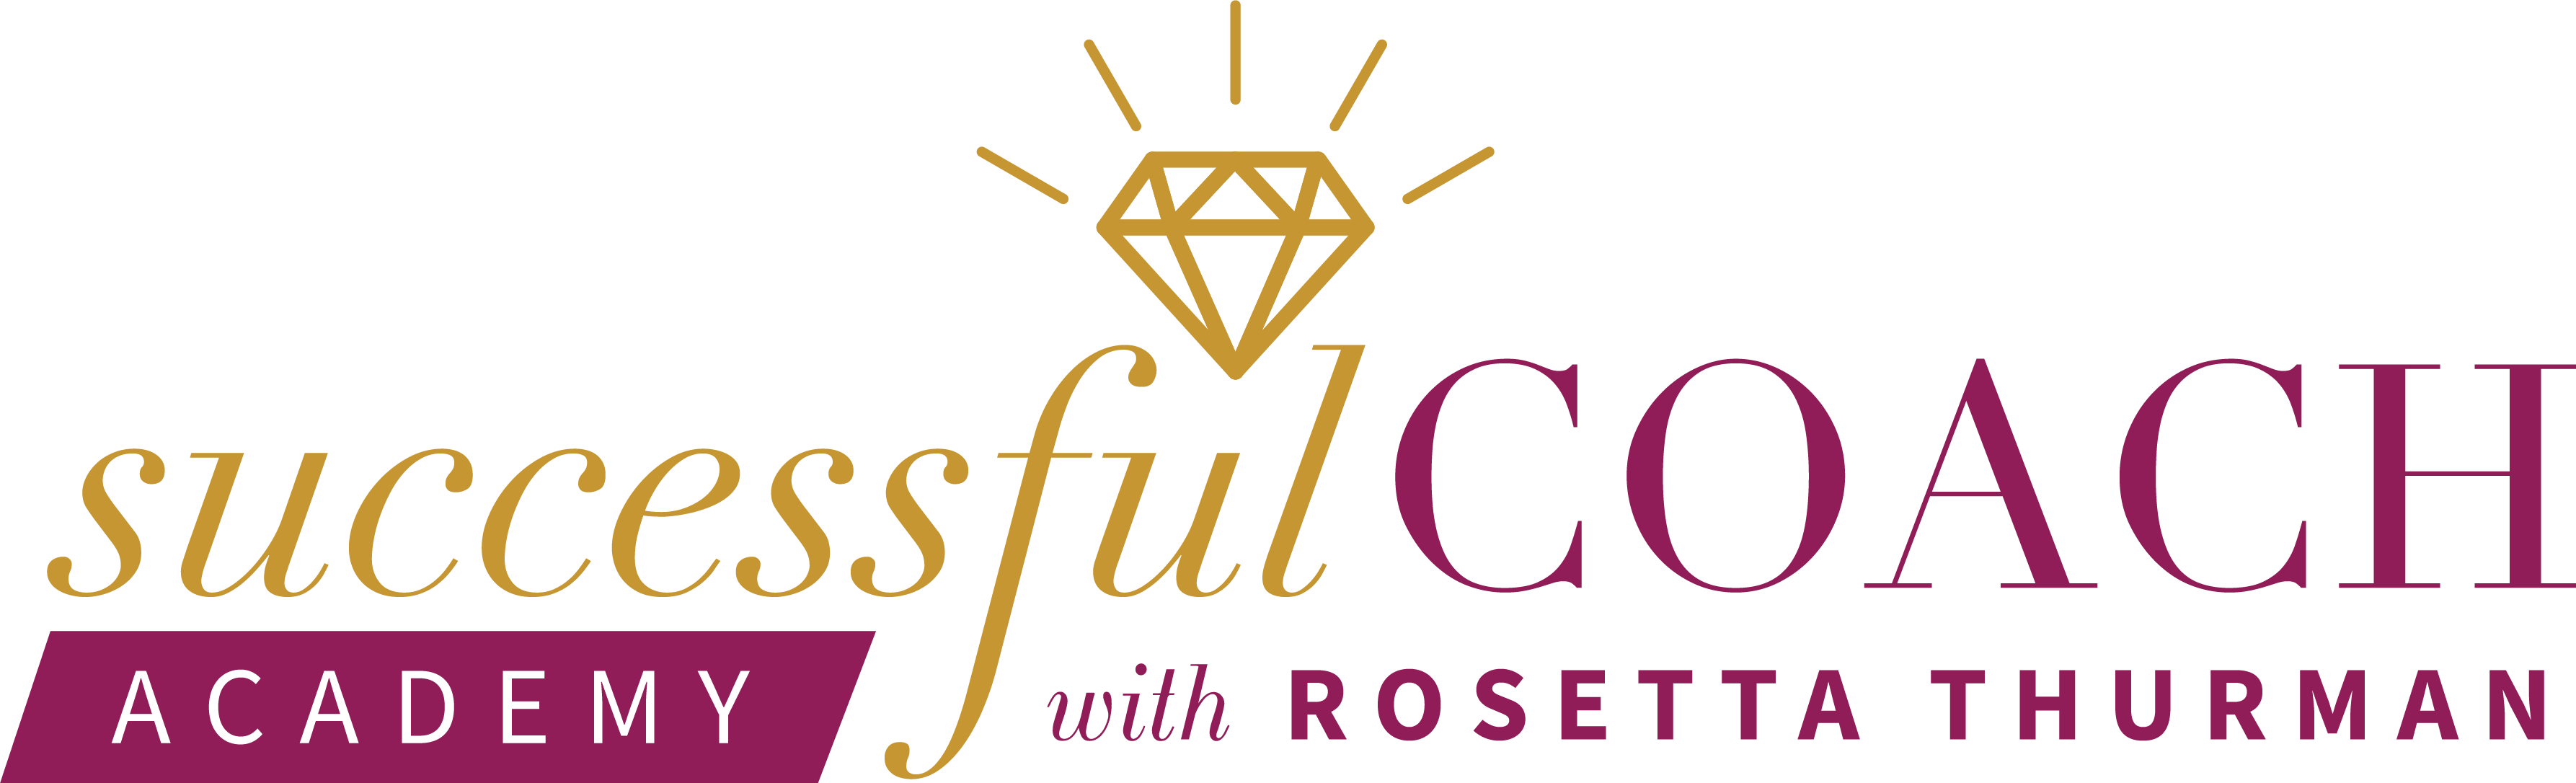 RosettaThurman-SuccessfulCoachAcademy-logo-horizontal (1)